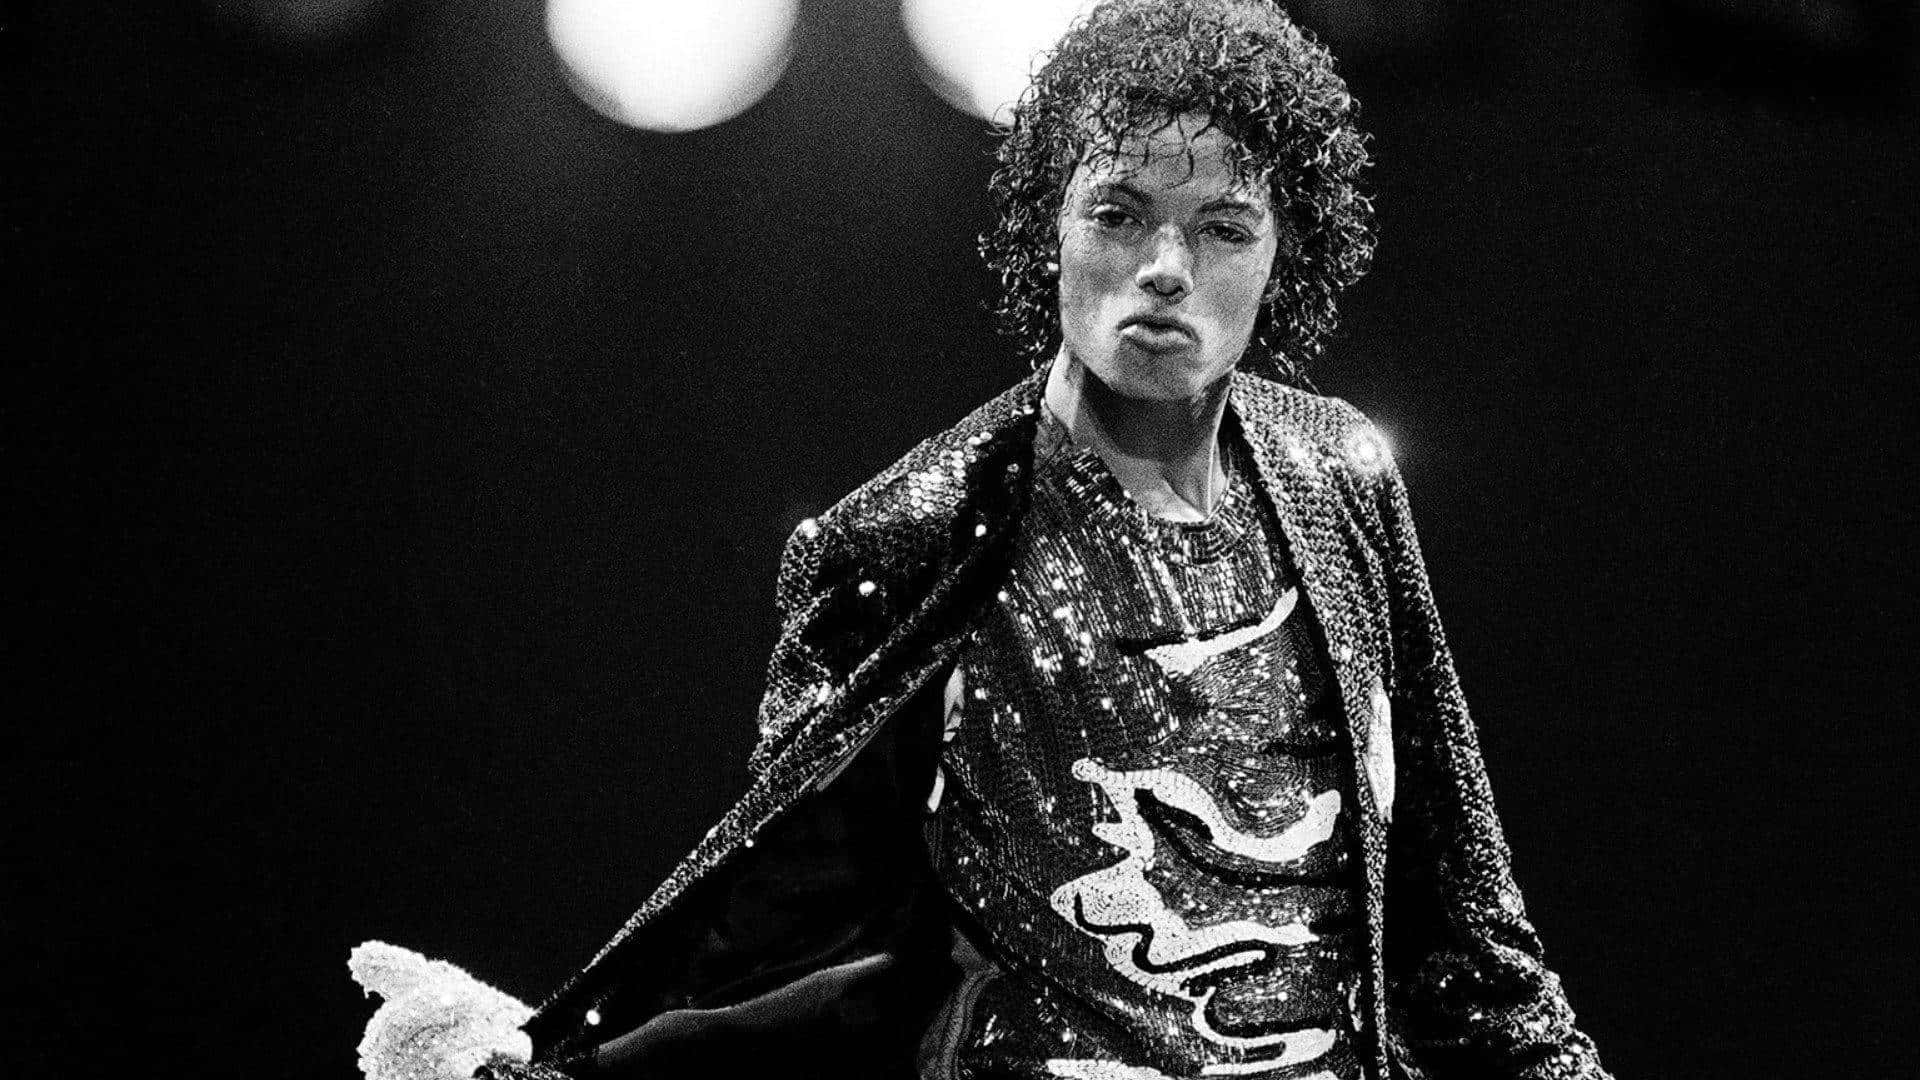 100+] Michael Jackson Iphone Wallpapers